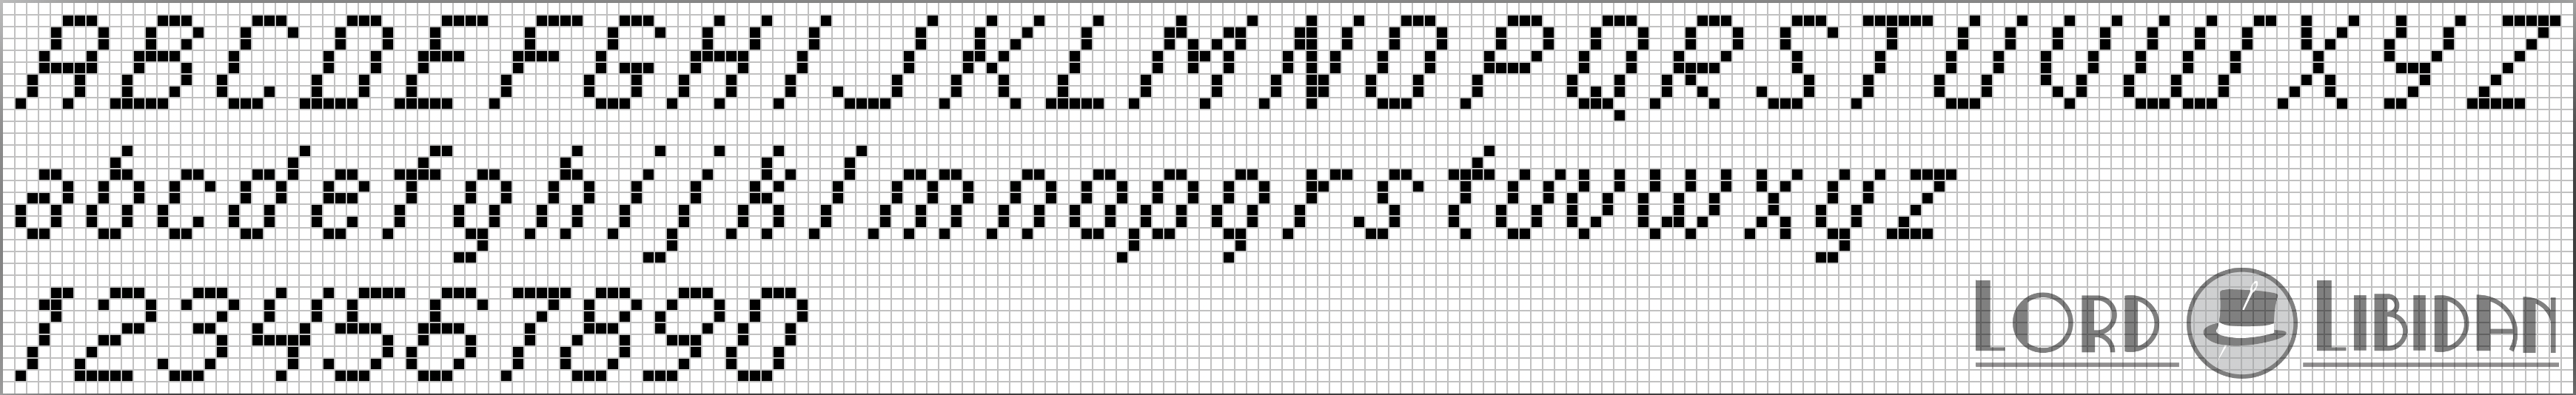 Italic Cross Stitch Alphabet Pattern Free Download by Lord Libidan